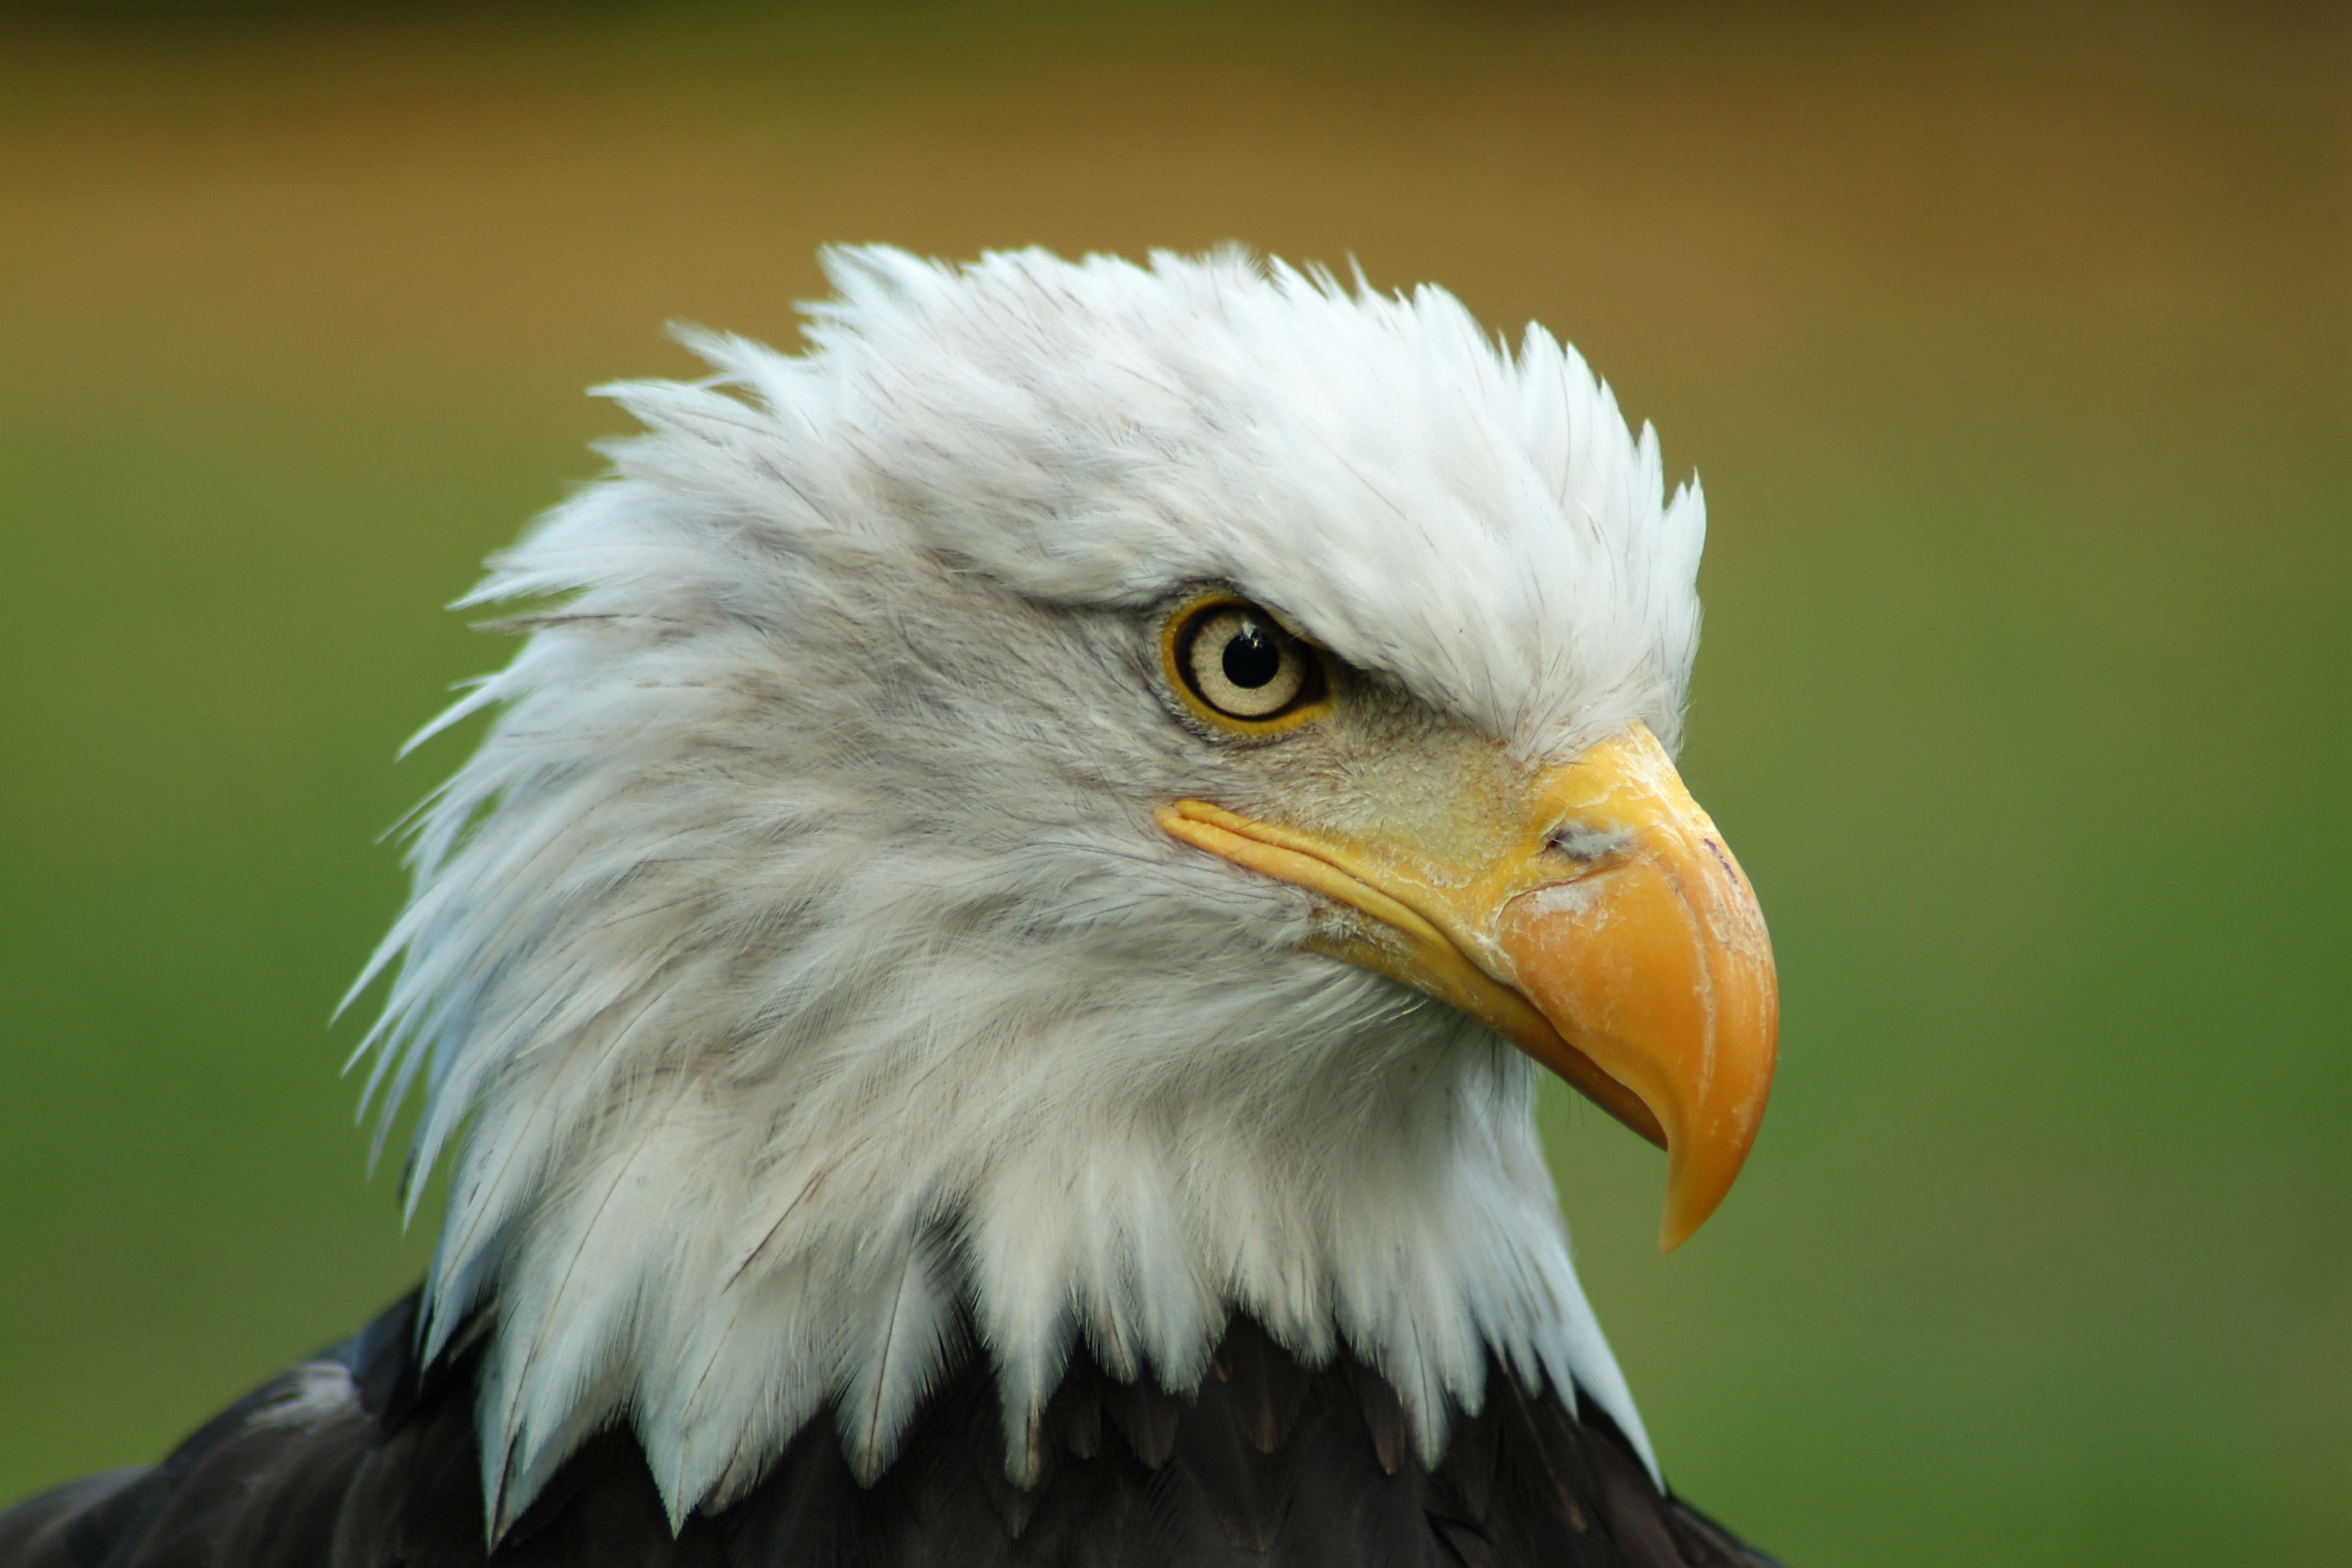 File:Bald Eagle Head.jpg - Wikimedia Commons